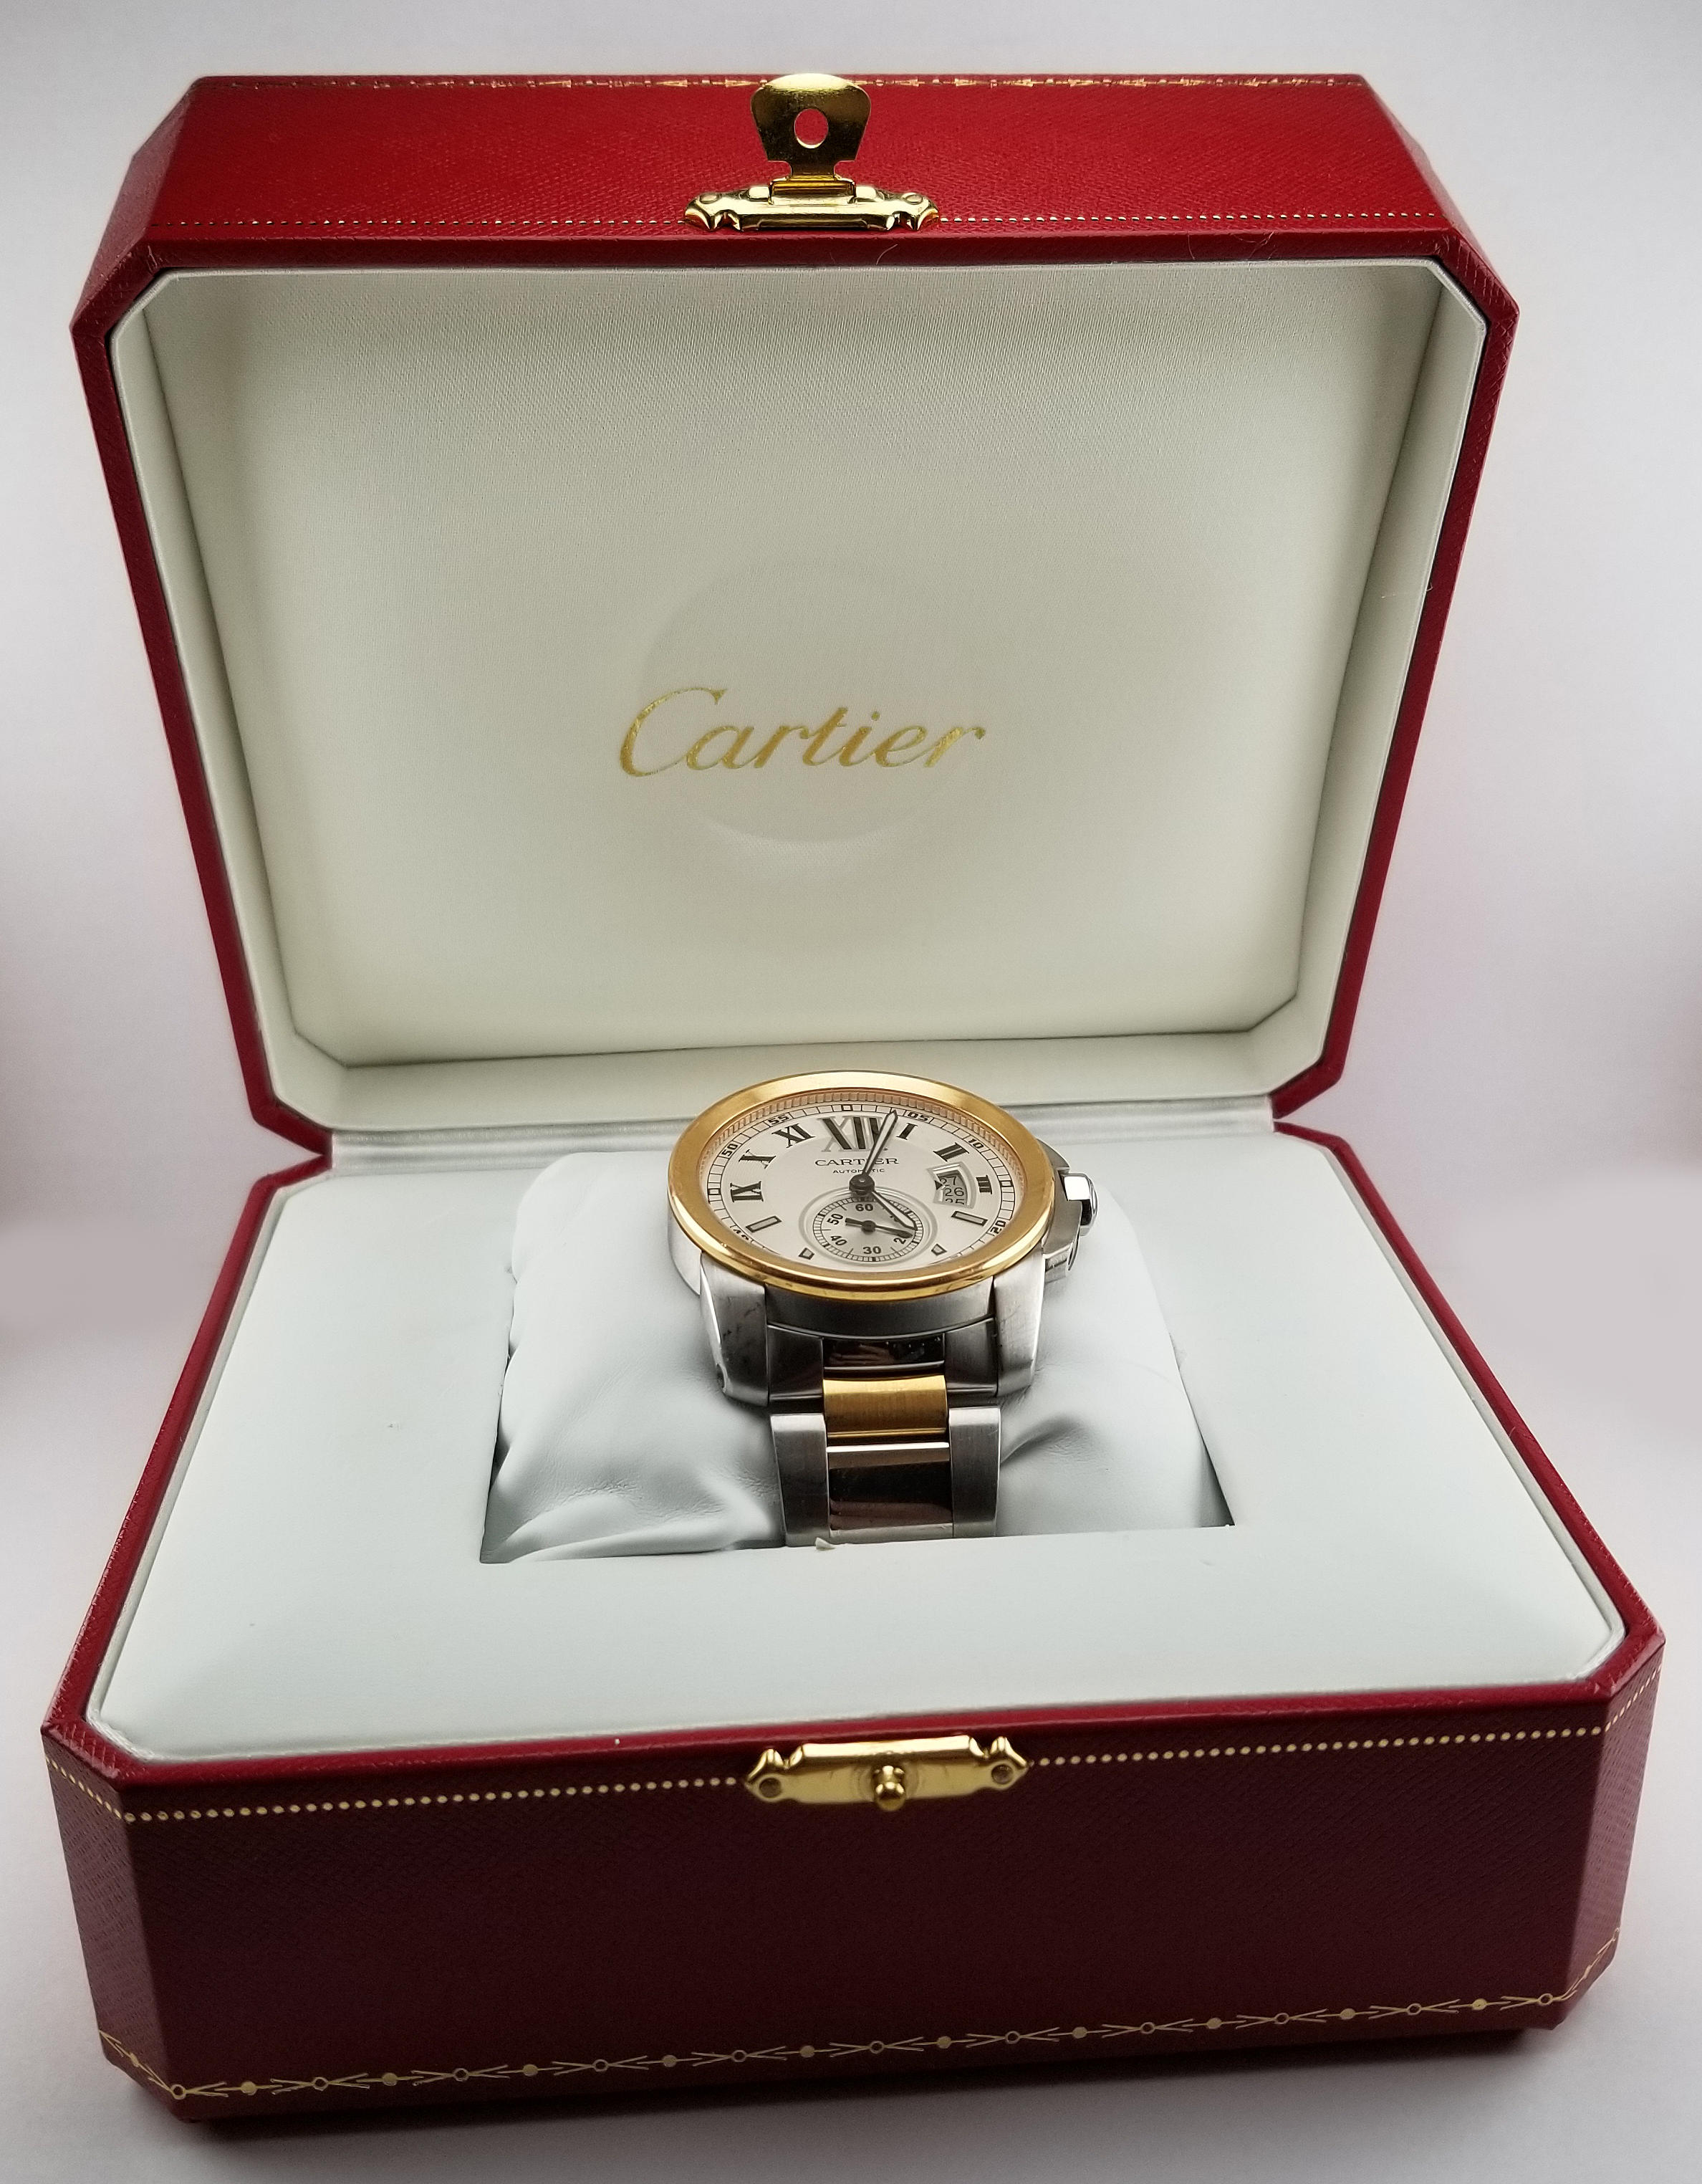 Calibre De Cartier W7100036 Men's Watch - Image 7 of 8